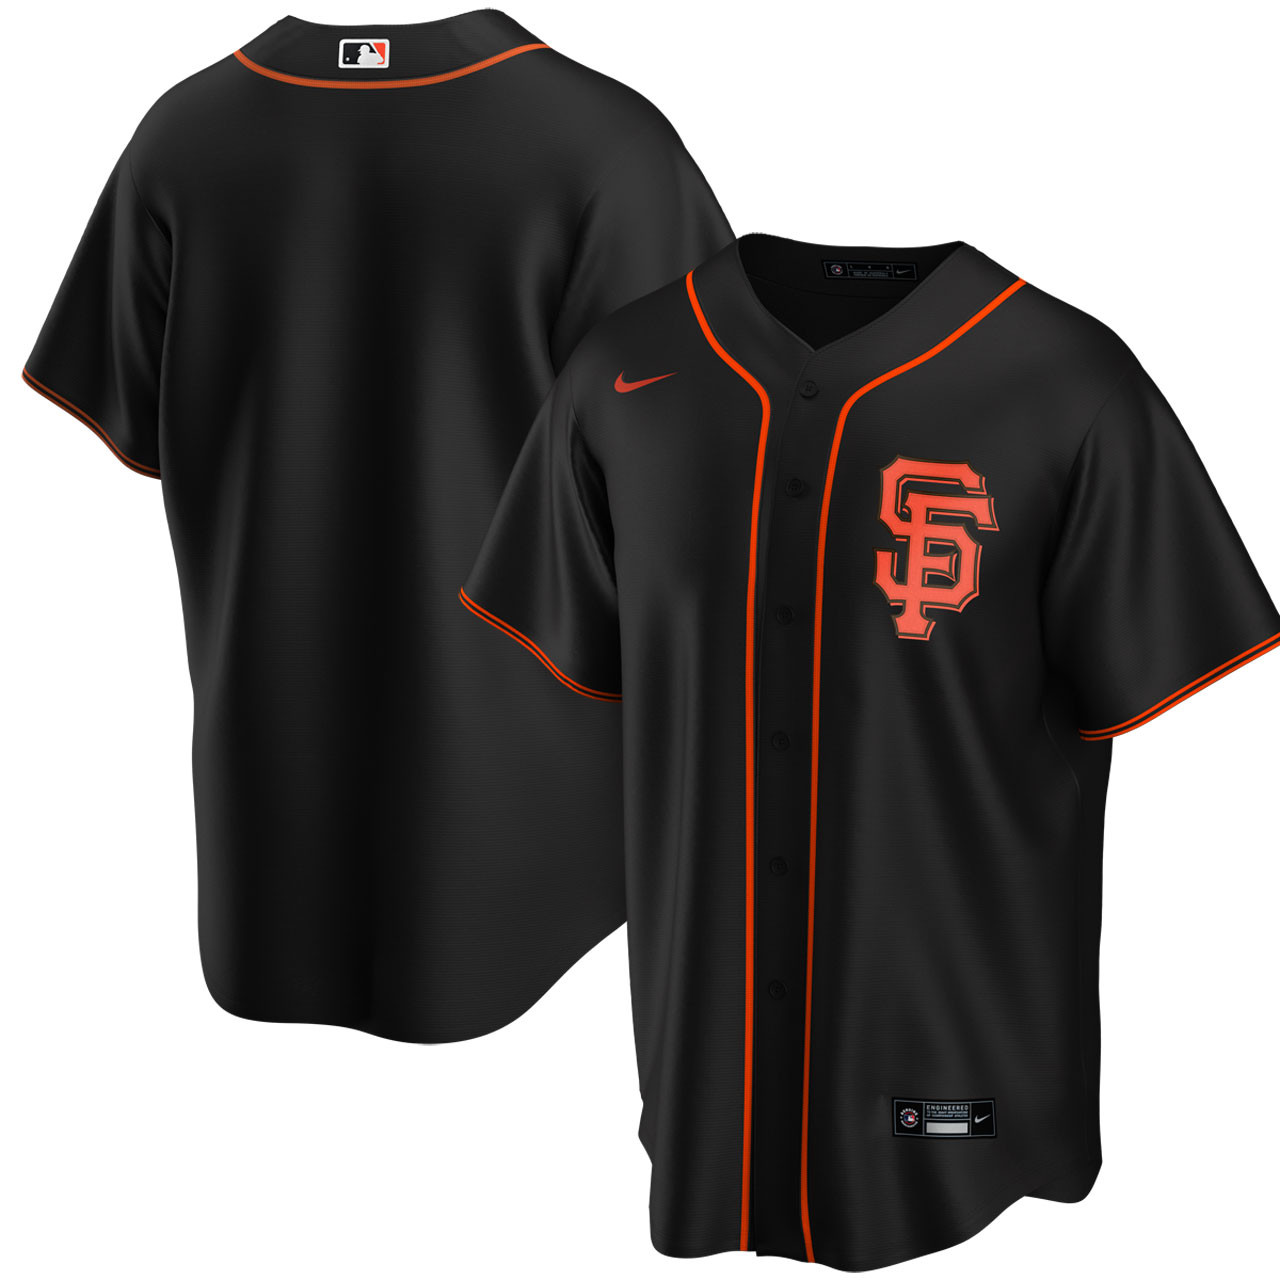 San Francisco Giants Black Alternate Jersey by Nike